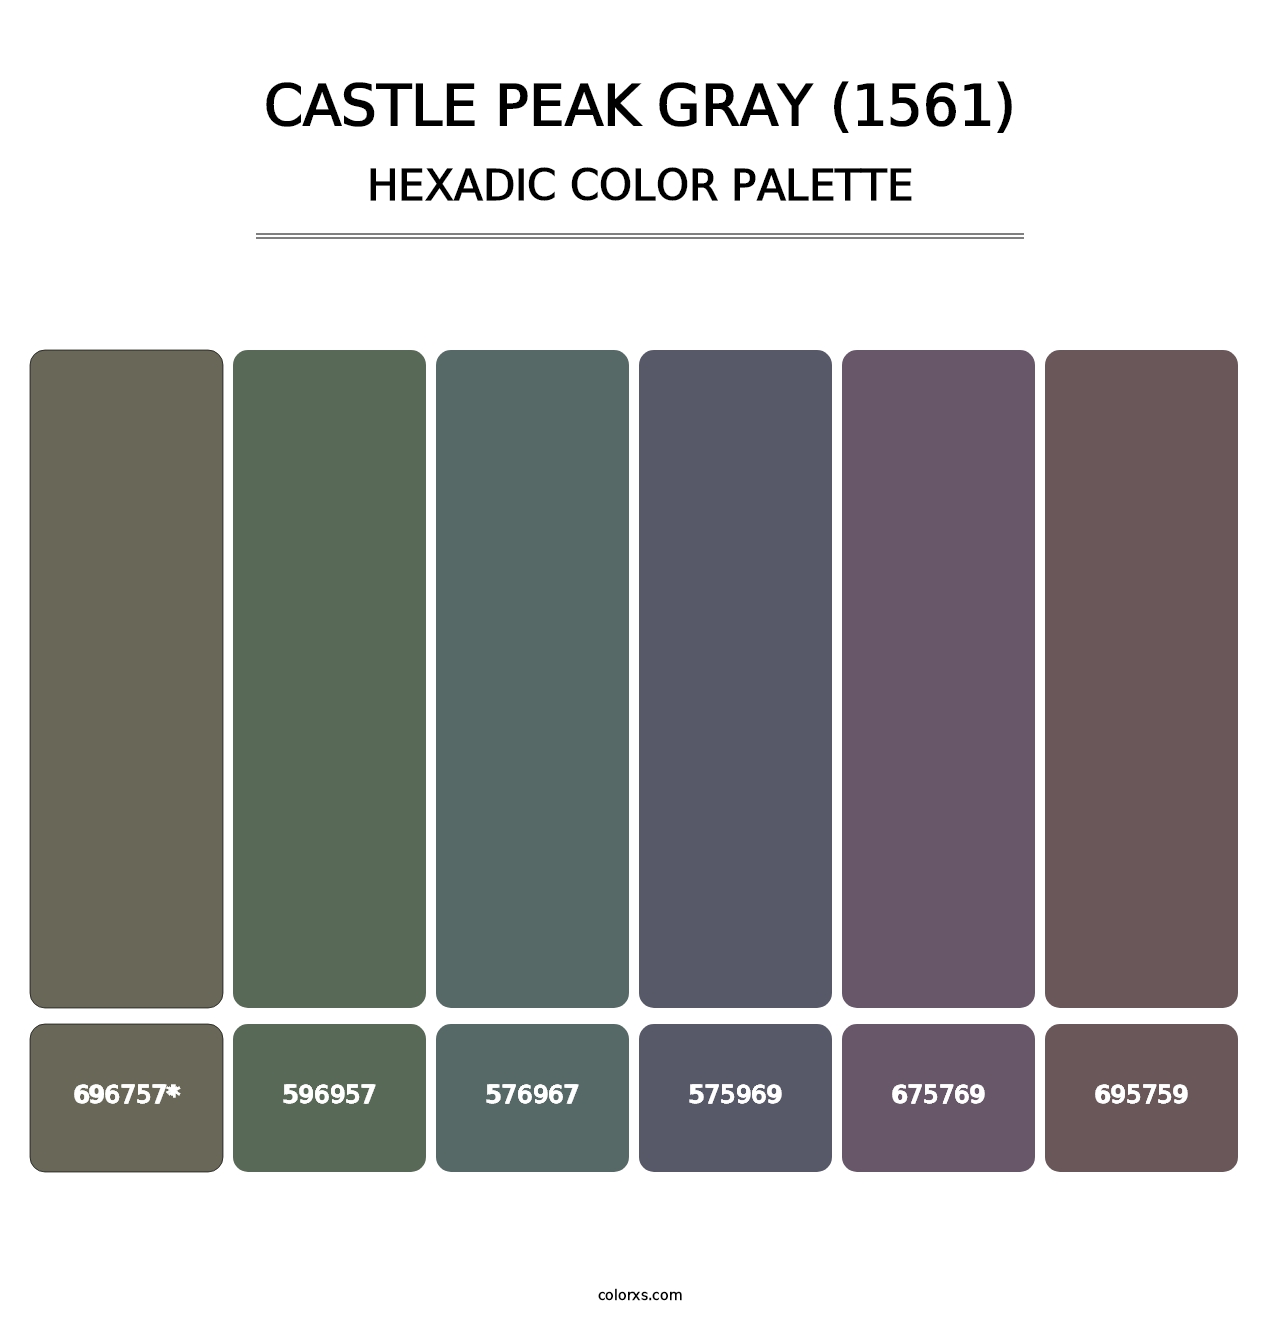 Castle Peak Gray (1561) - Hexadic Color Palette